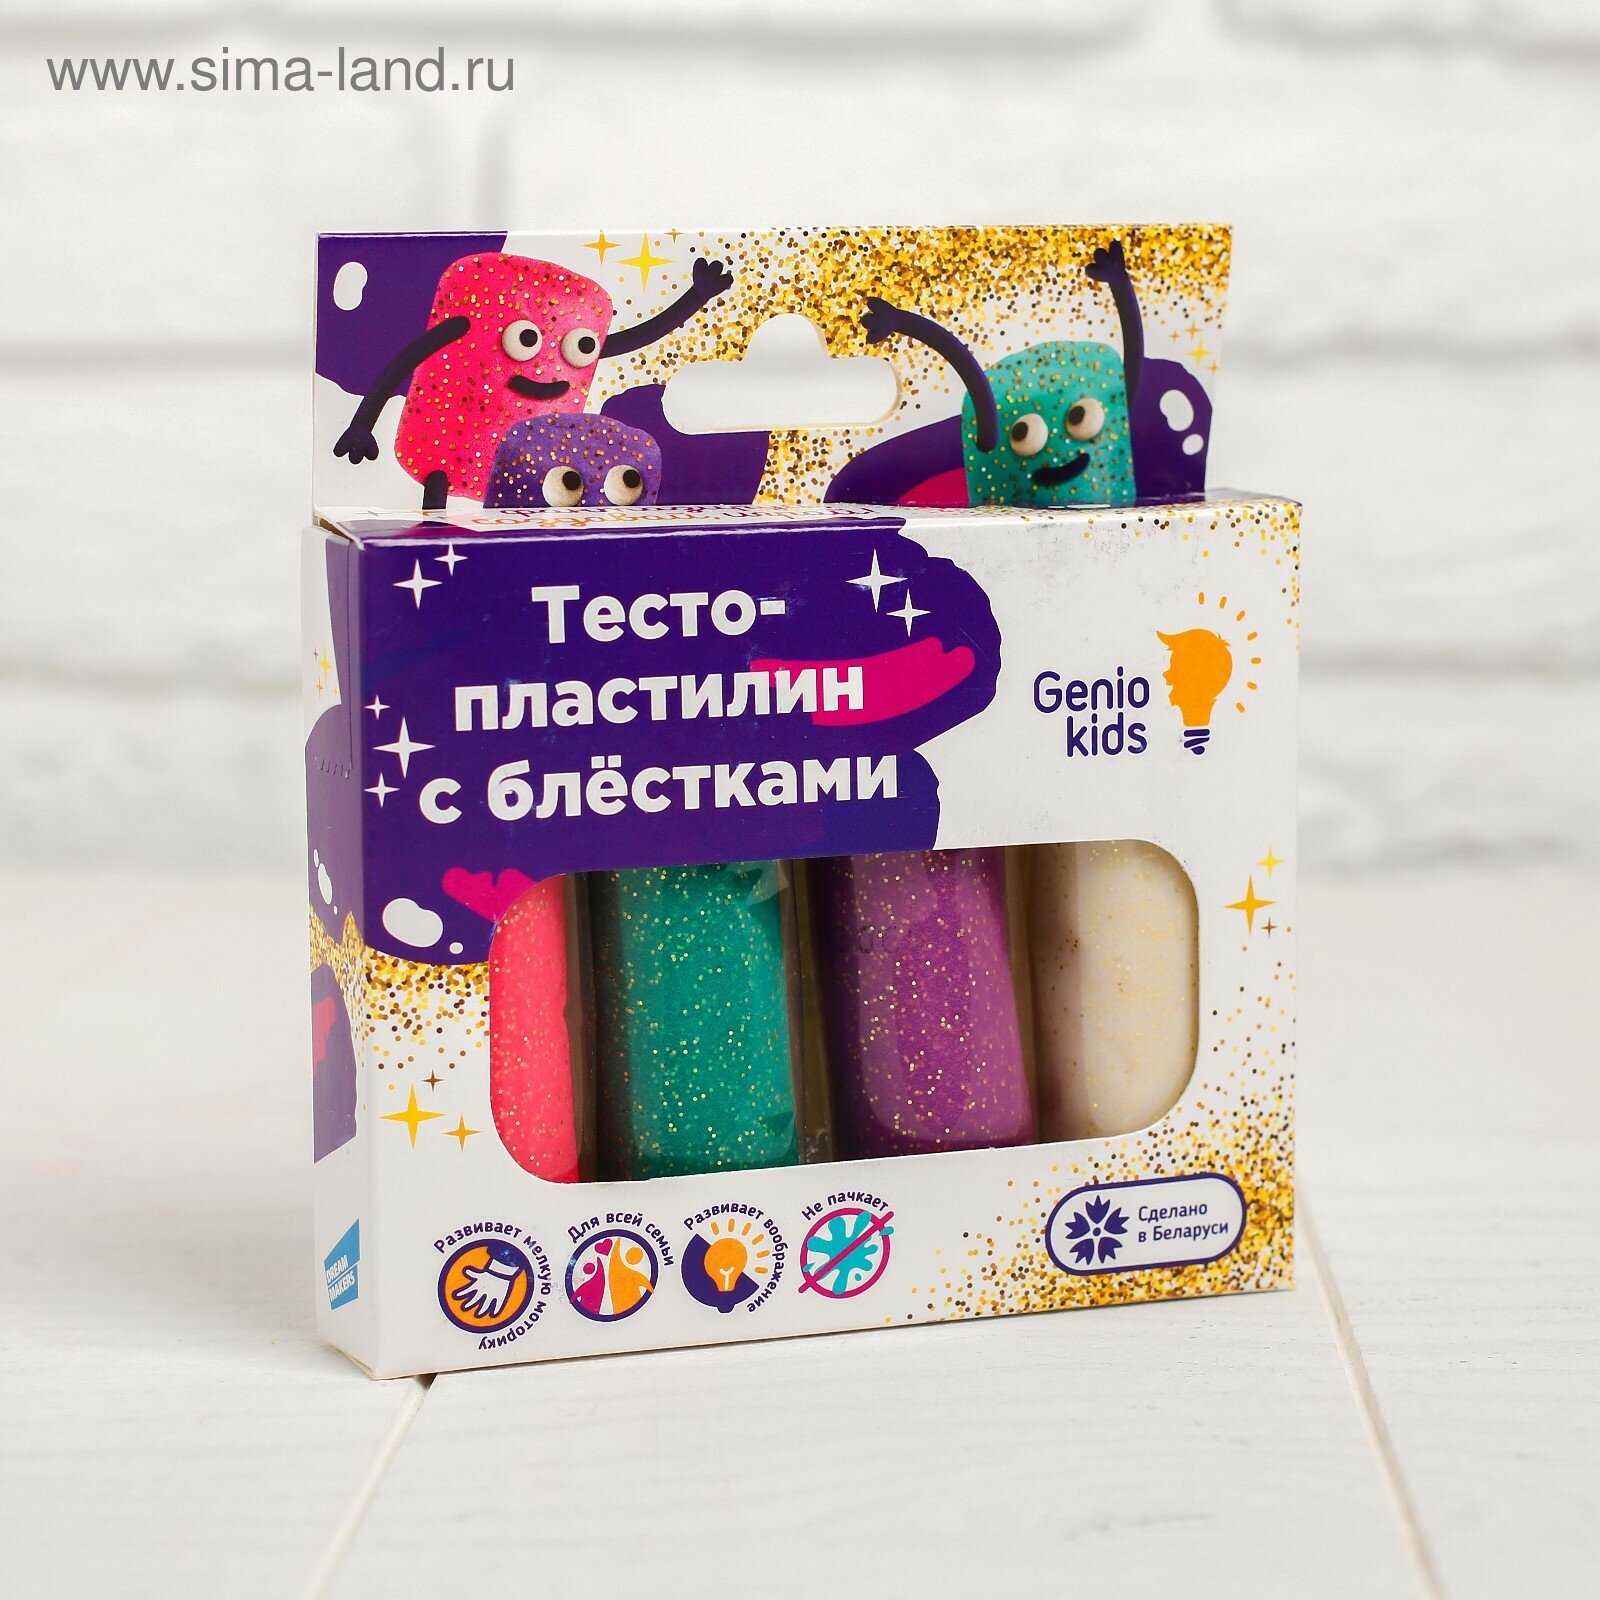 Набор для детской лепки Genio Kids "Тесто-пластилин", с блестками, 4 цвета - фото №3